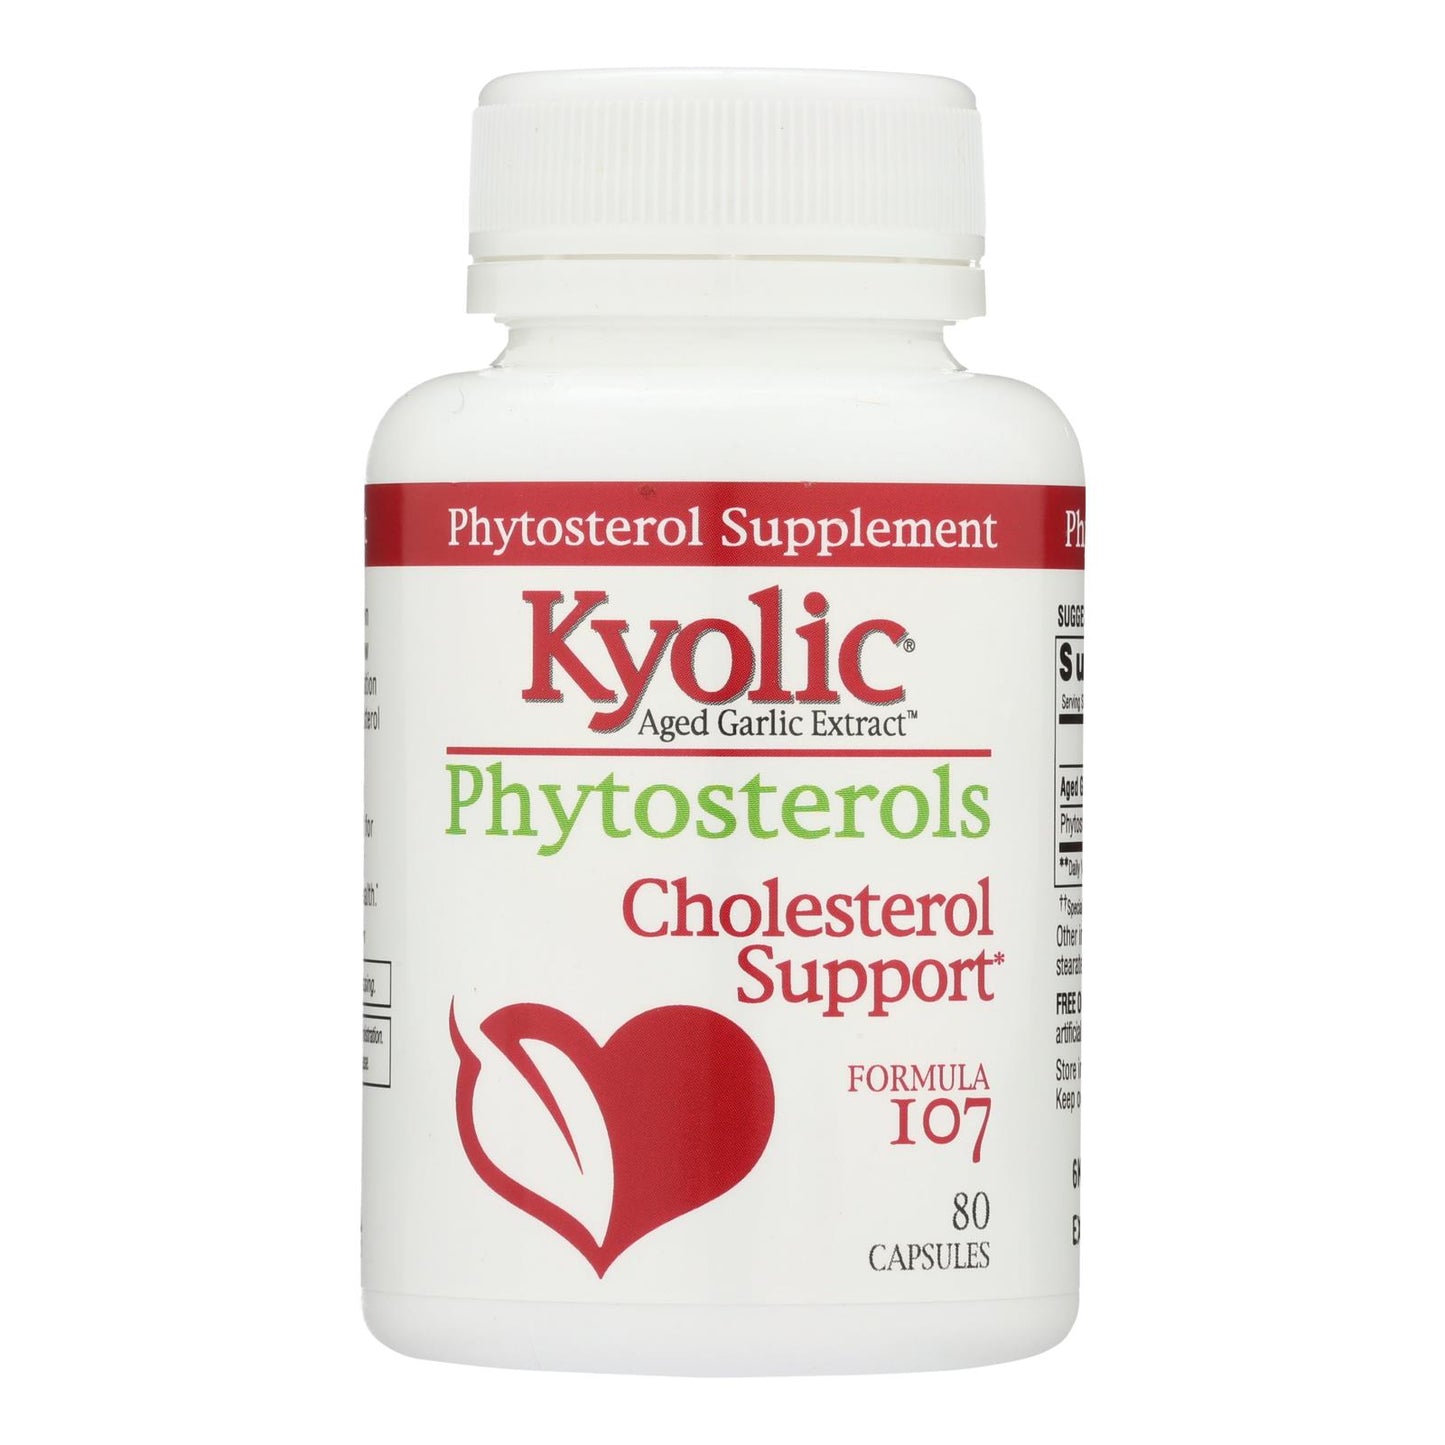 
                  
                    Kyolic, Aged Garlic Extract Phytosterols Formula 107, 80 Capsules
                  
                